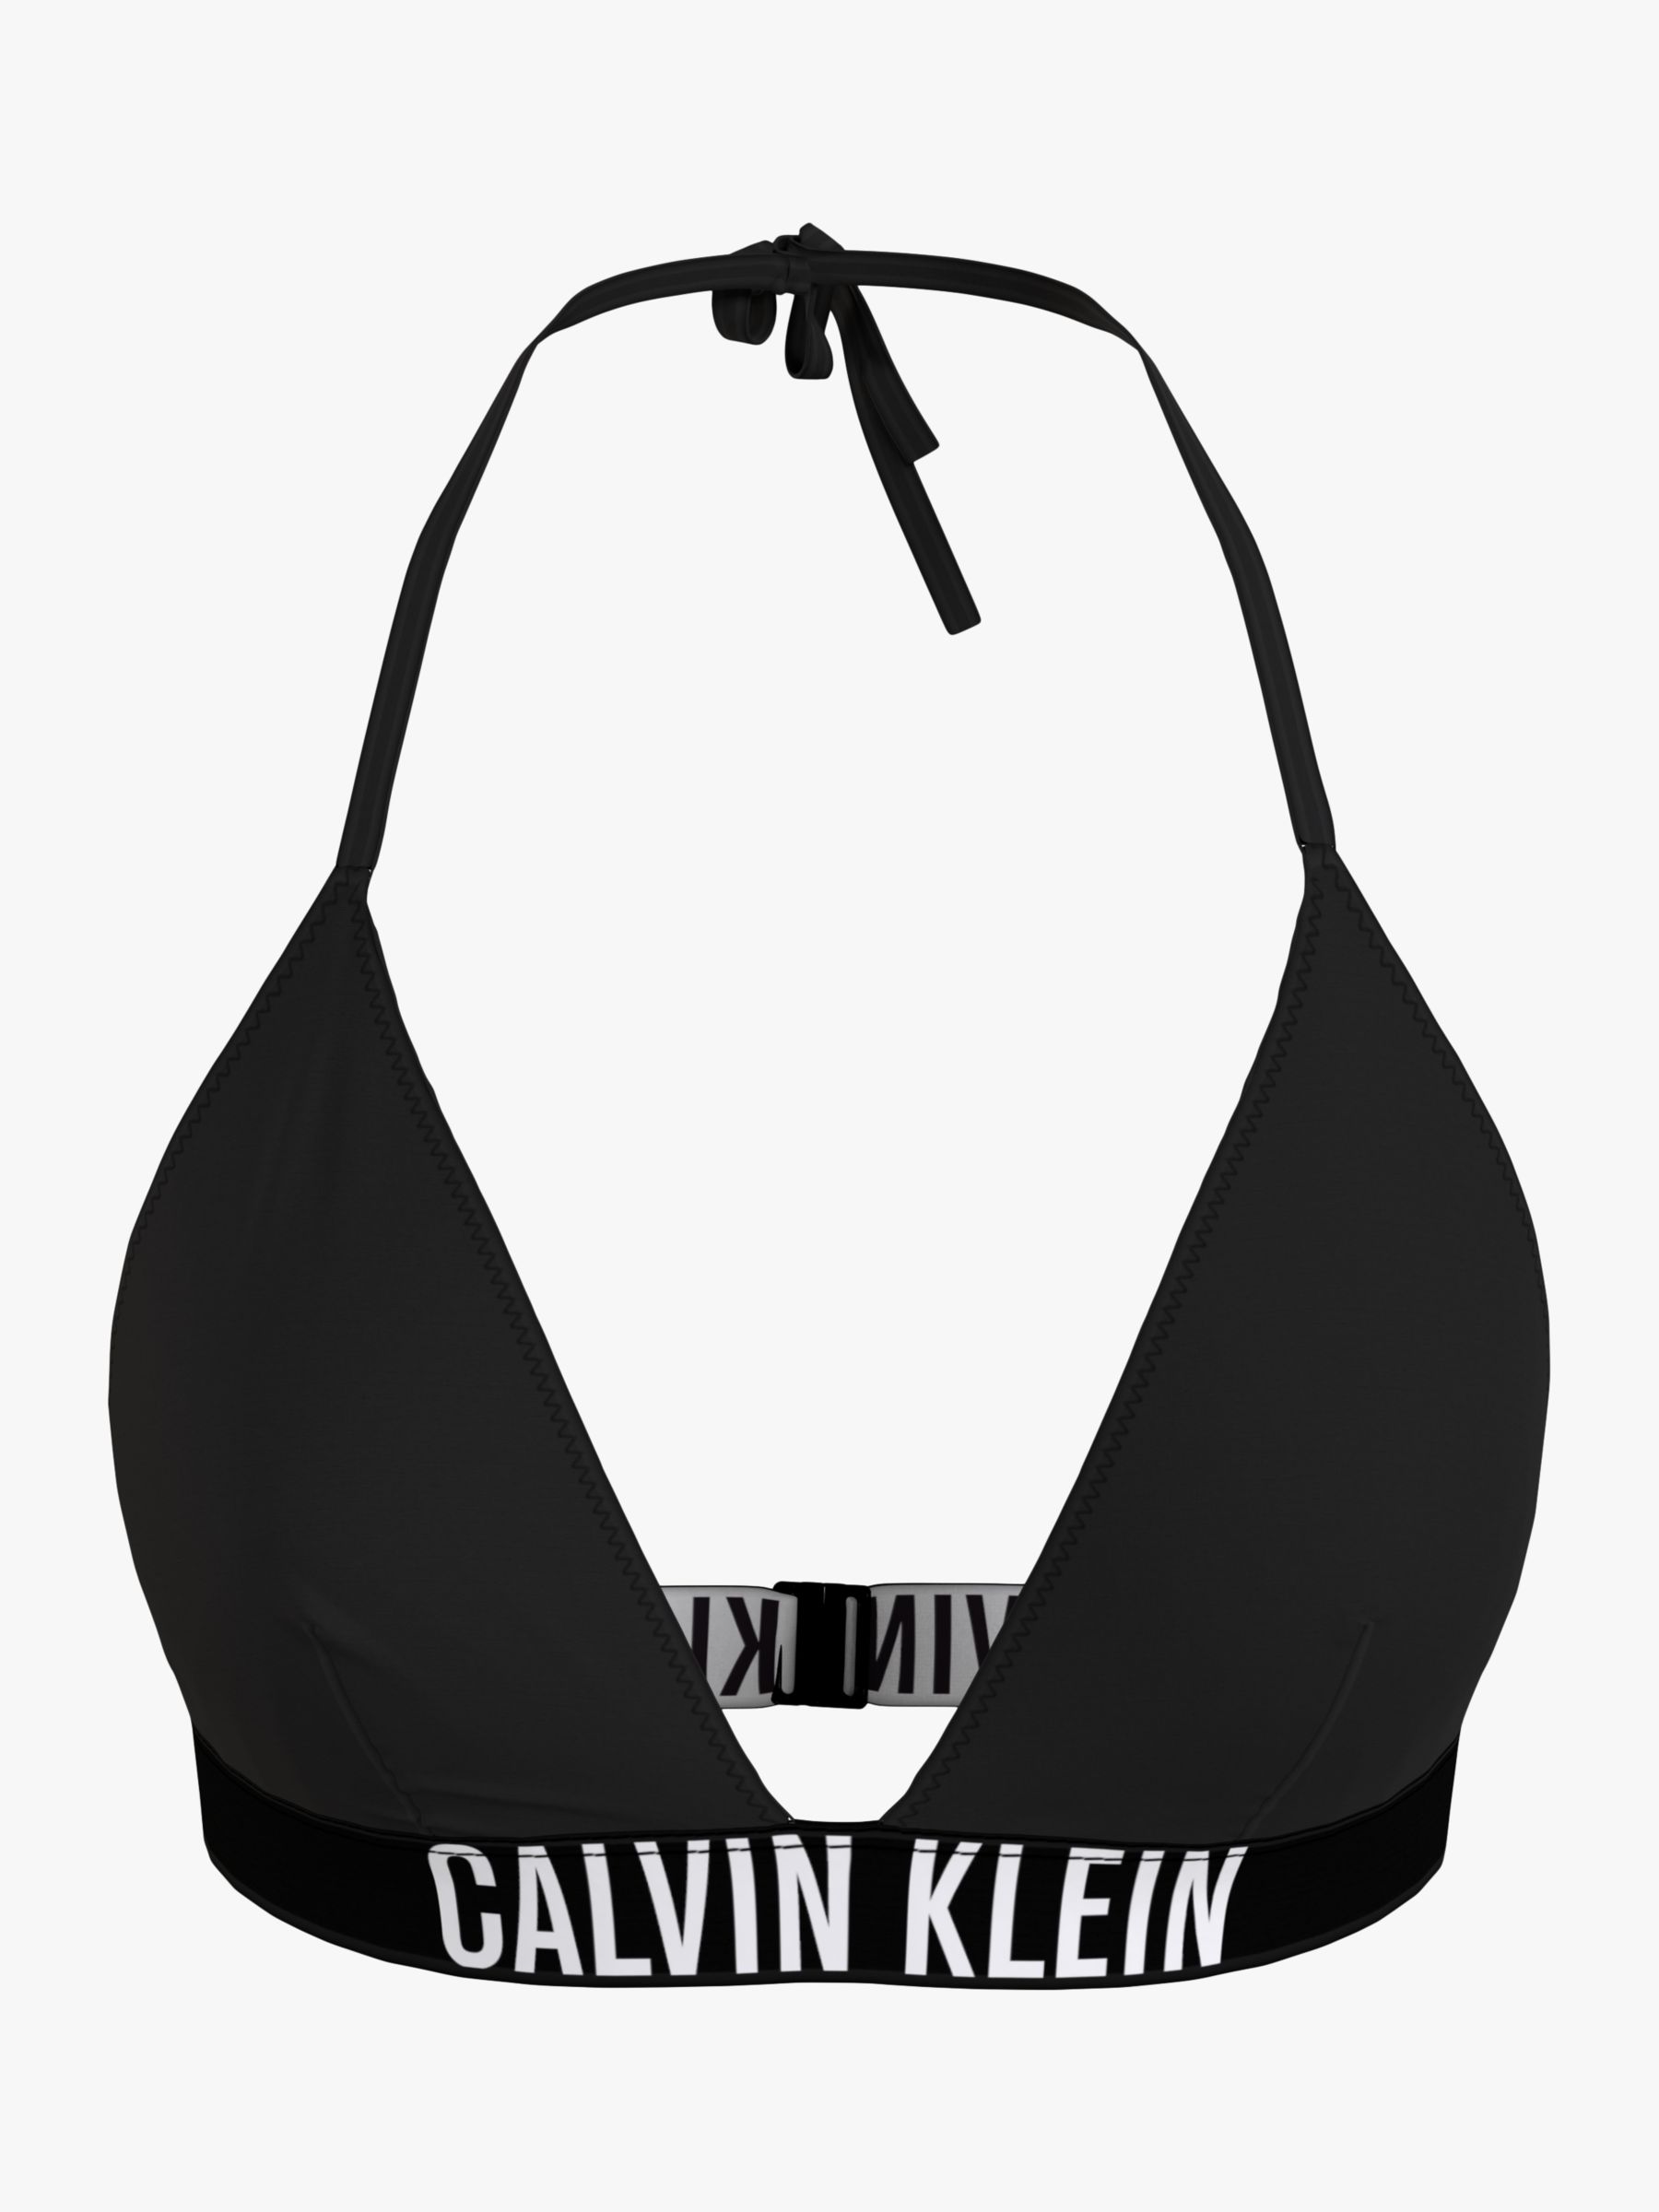 Calvin Klein Intense Power Triangle Bikini Top, Black, XS